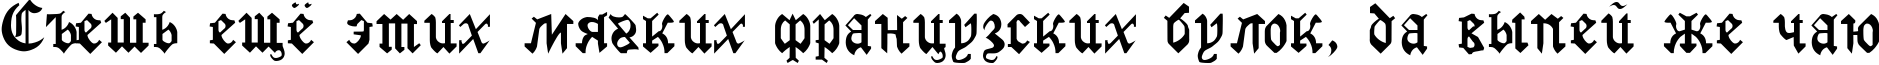 Пример написания шрифтом GothicRus Medium текста на русском